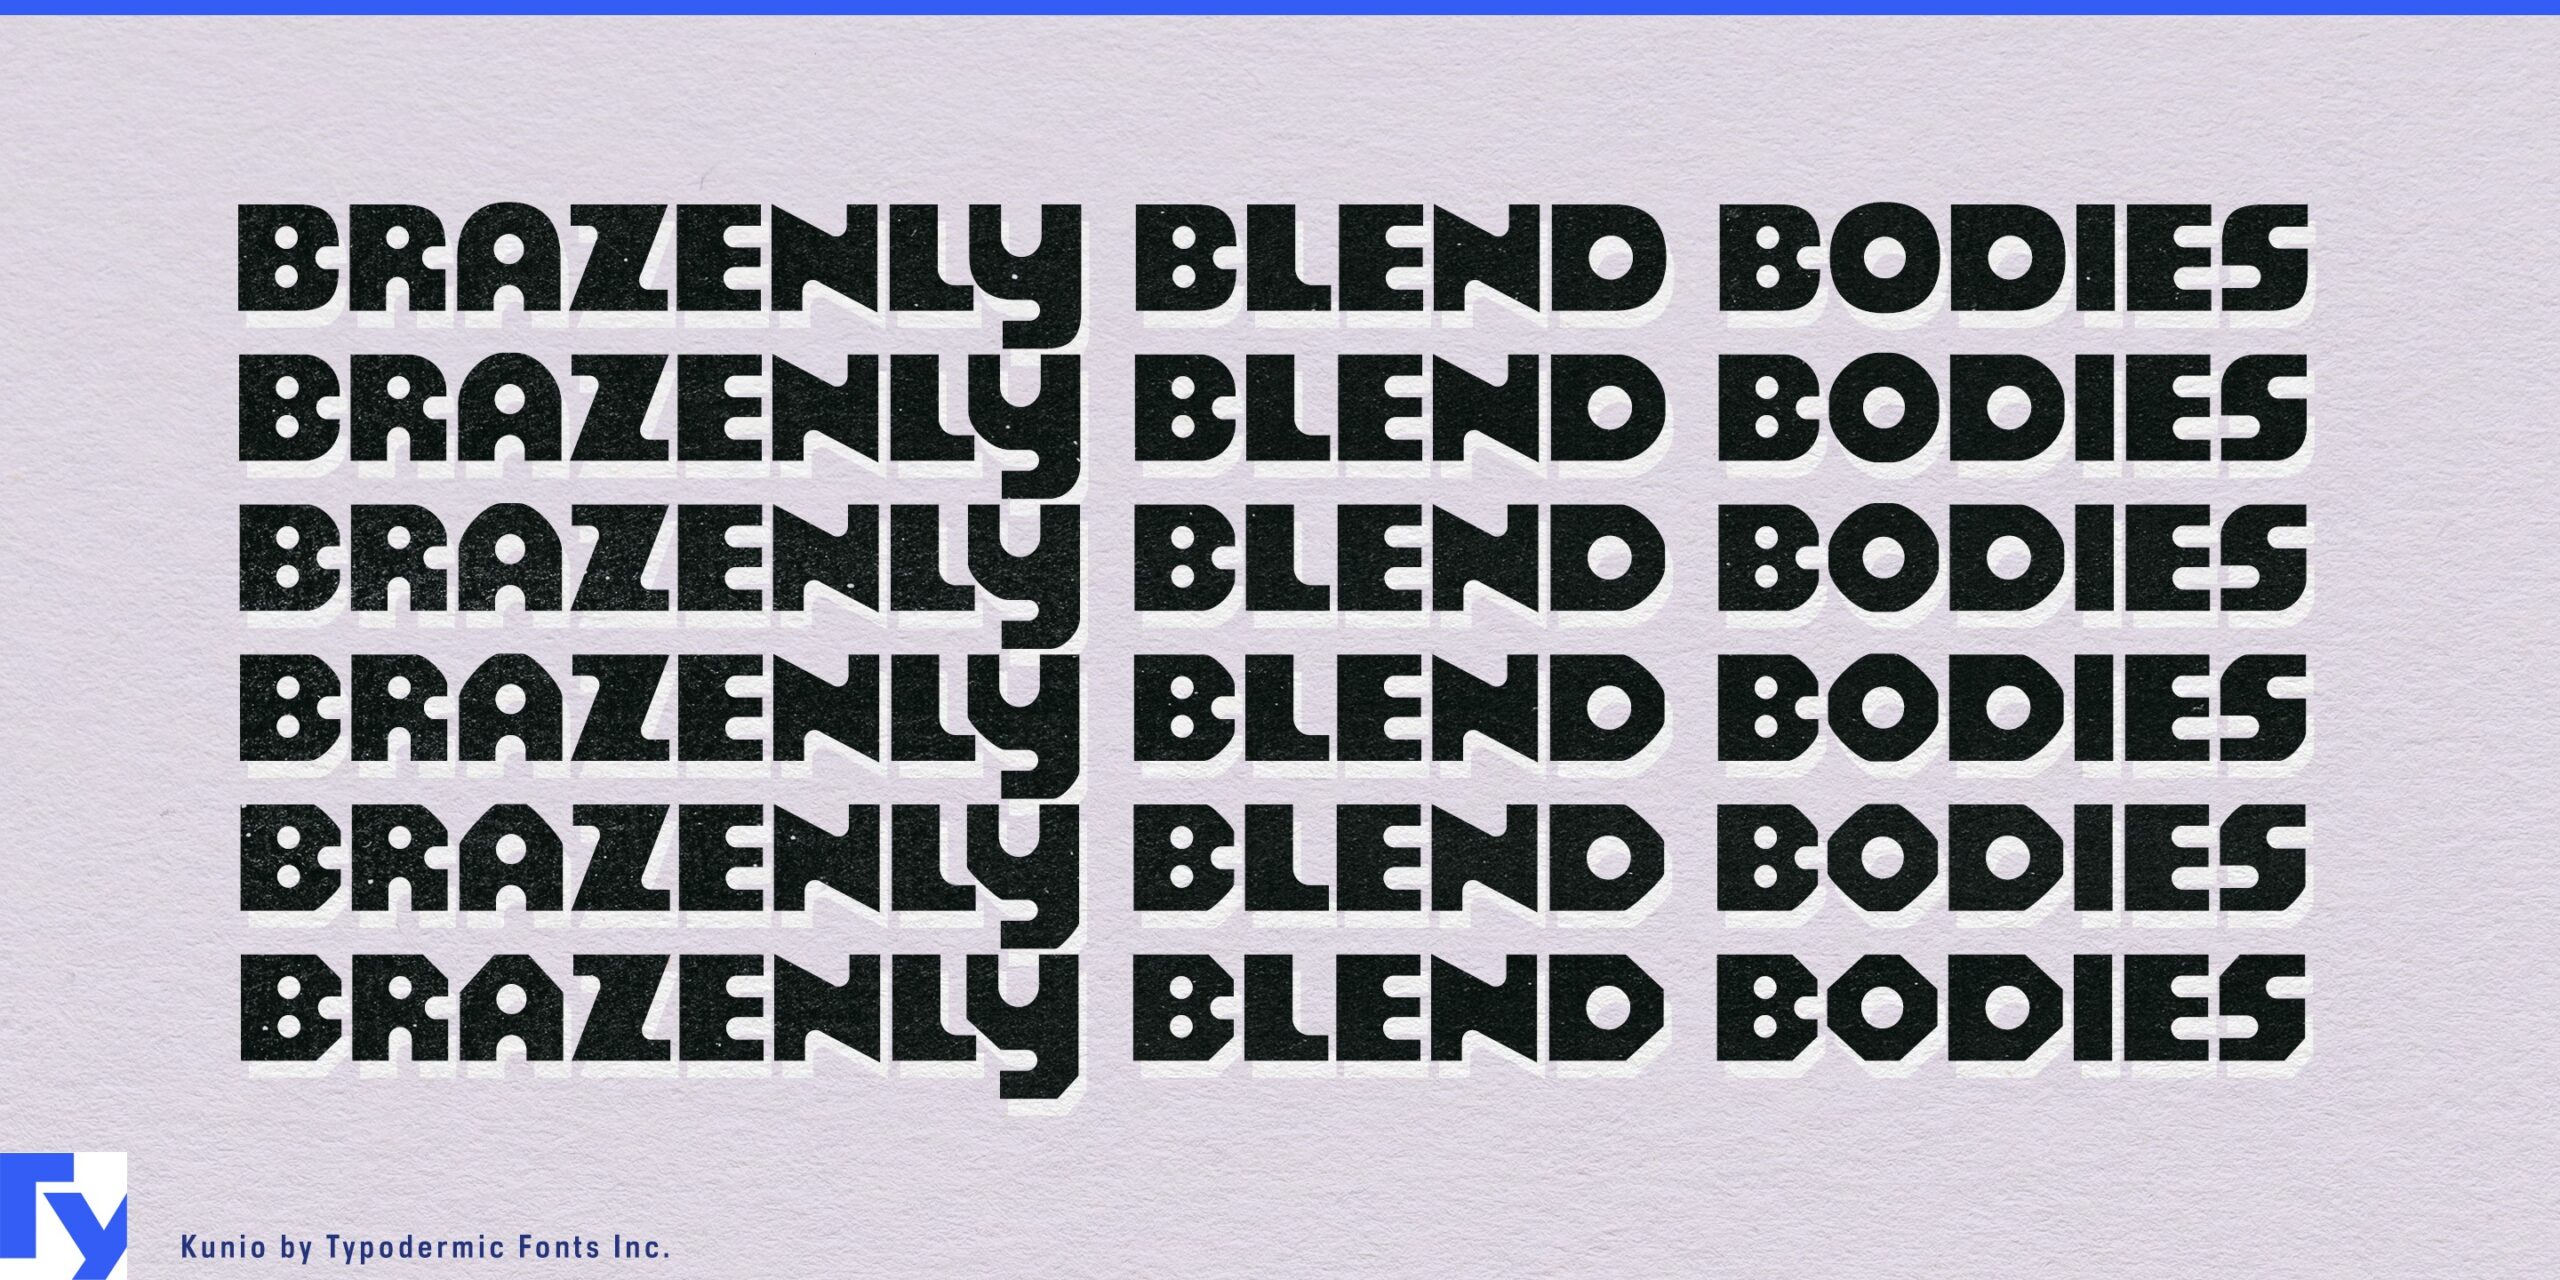 Endless Possibilities: Kunio Typeface Inspires Million Combinations